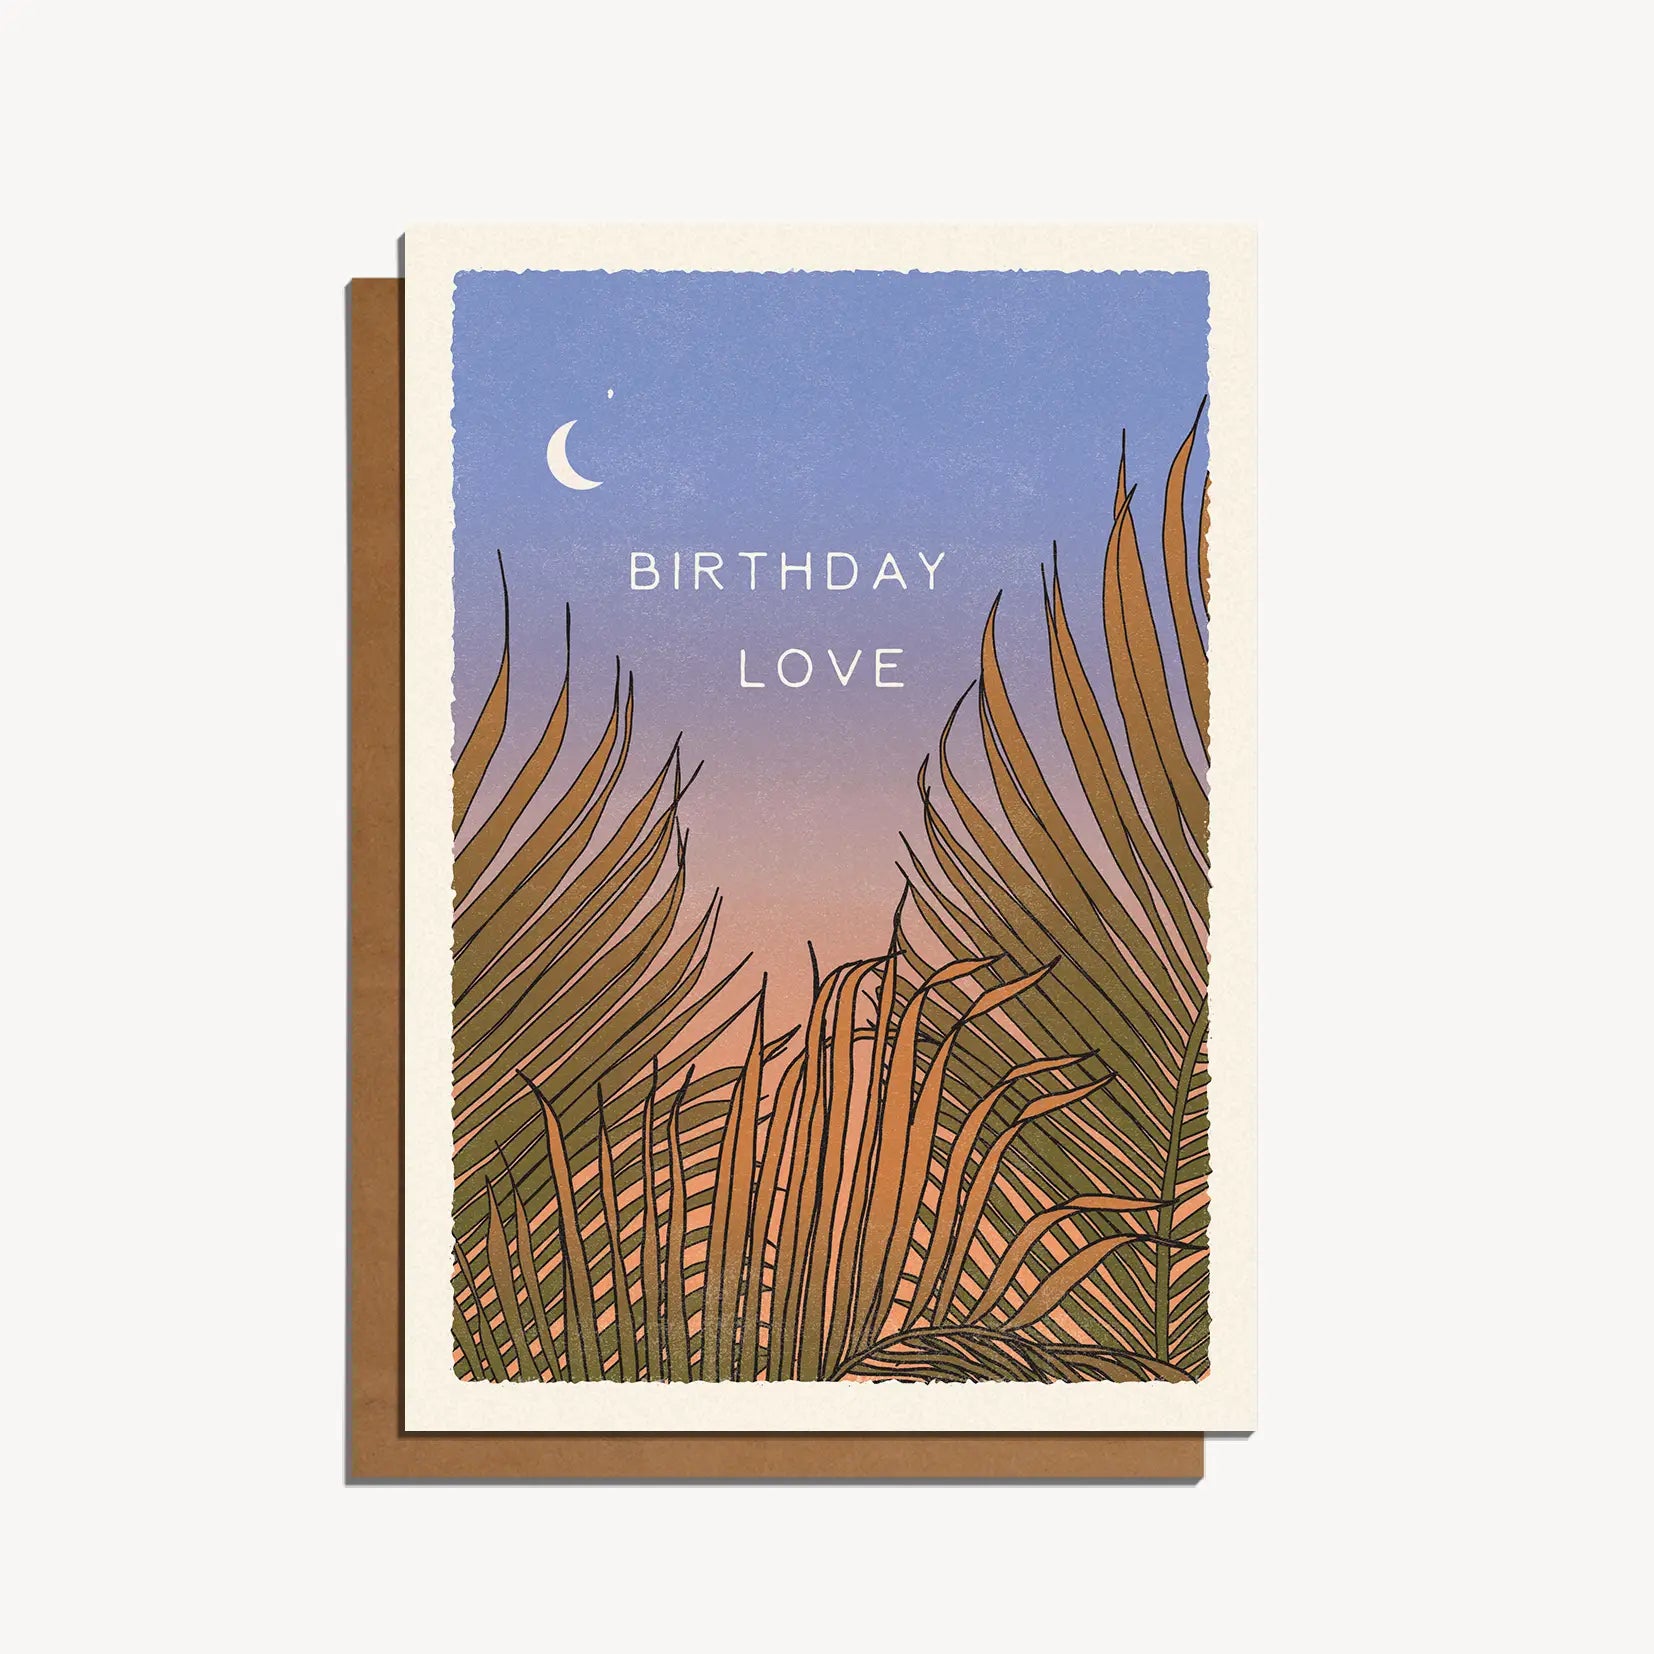 Birthday Love - Greeting Card